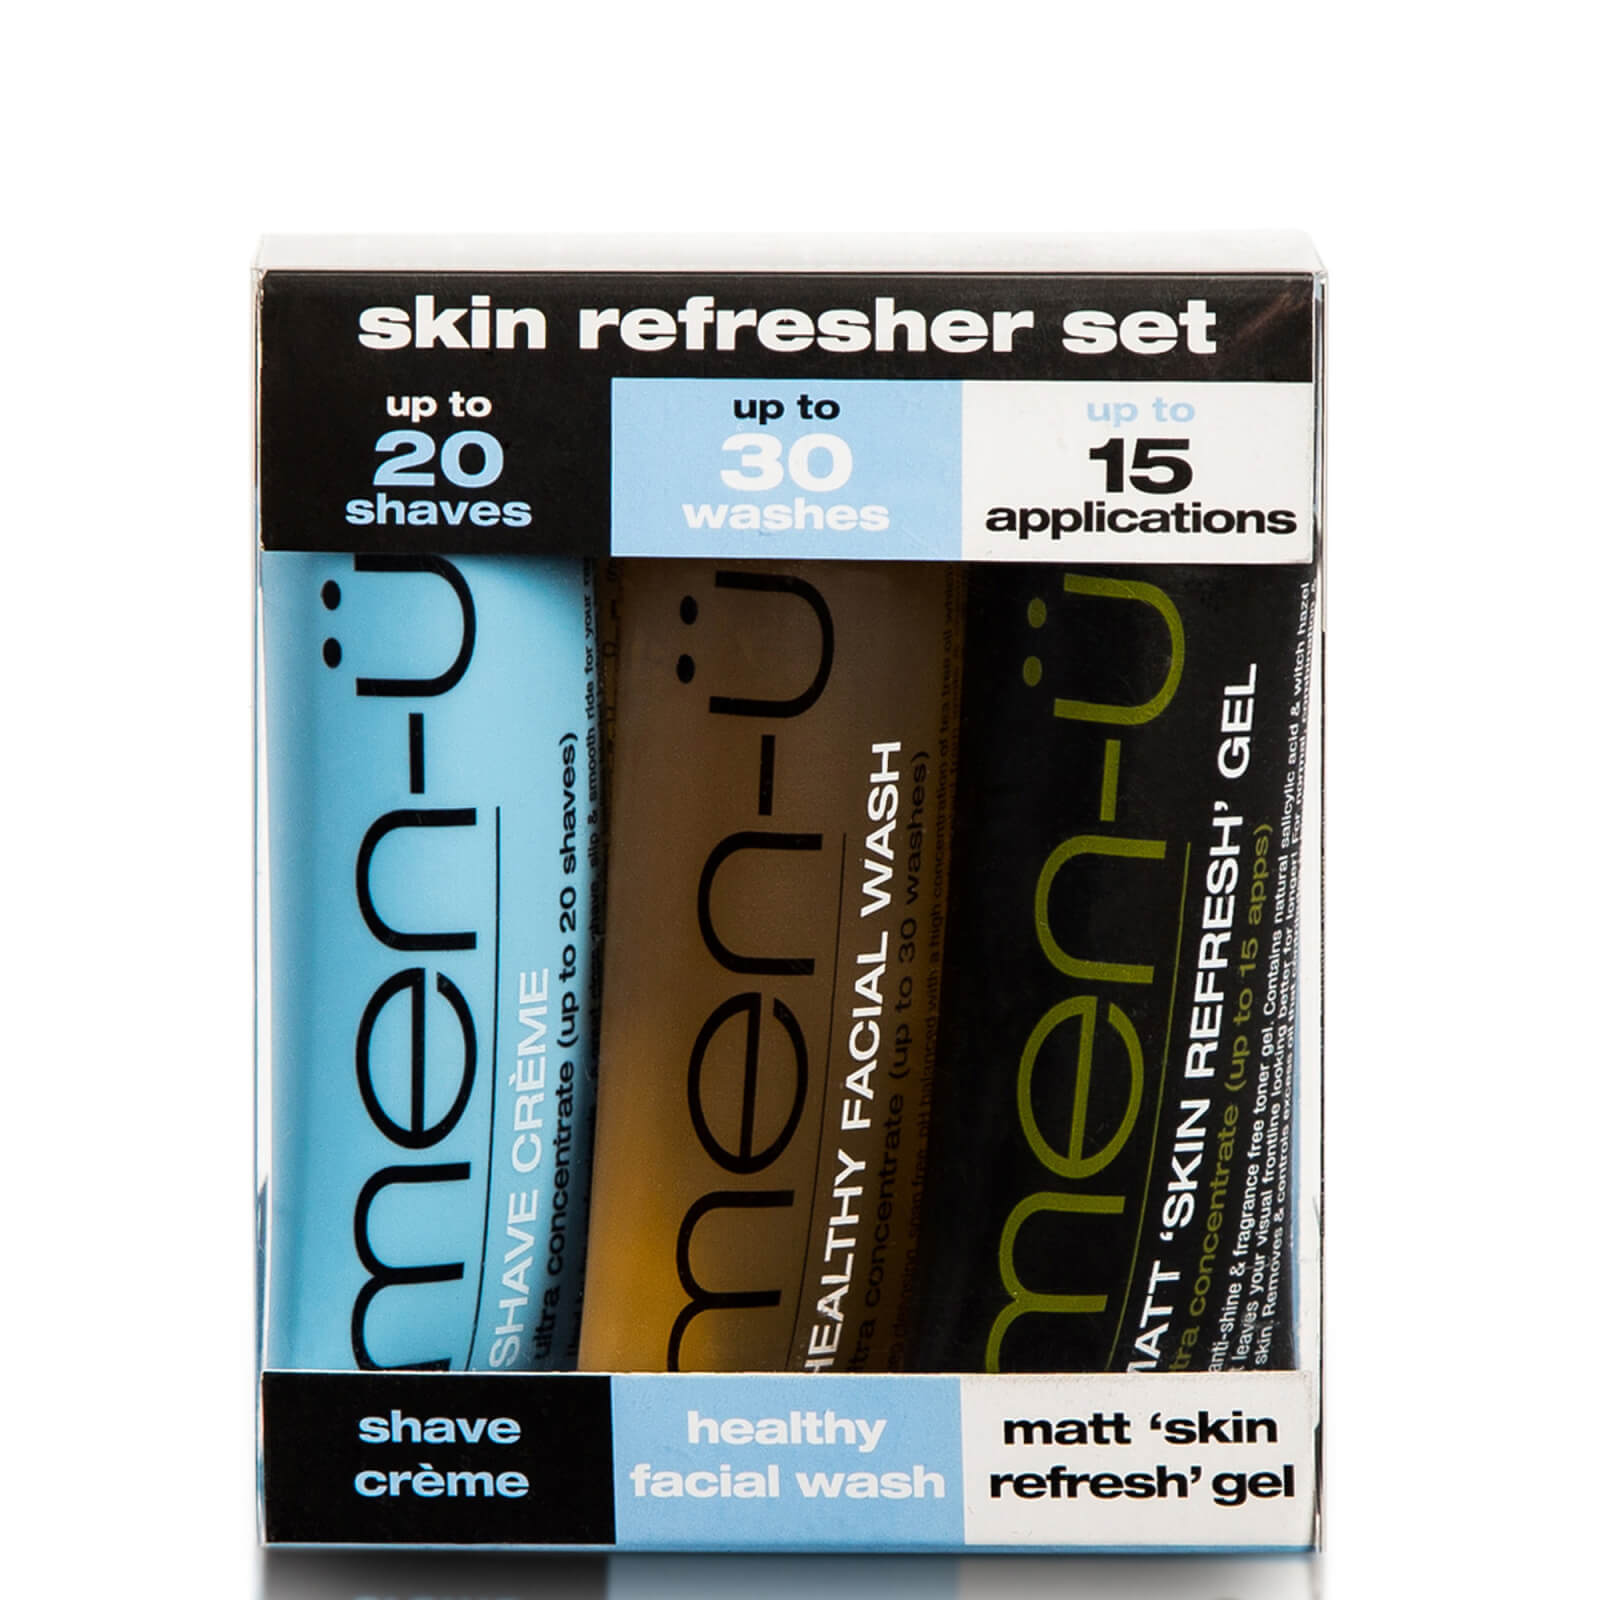 men-ü Skin Refresher - 15ml (3 Products)